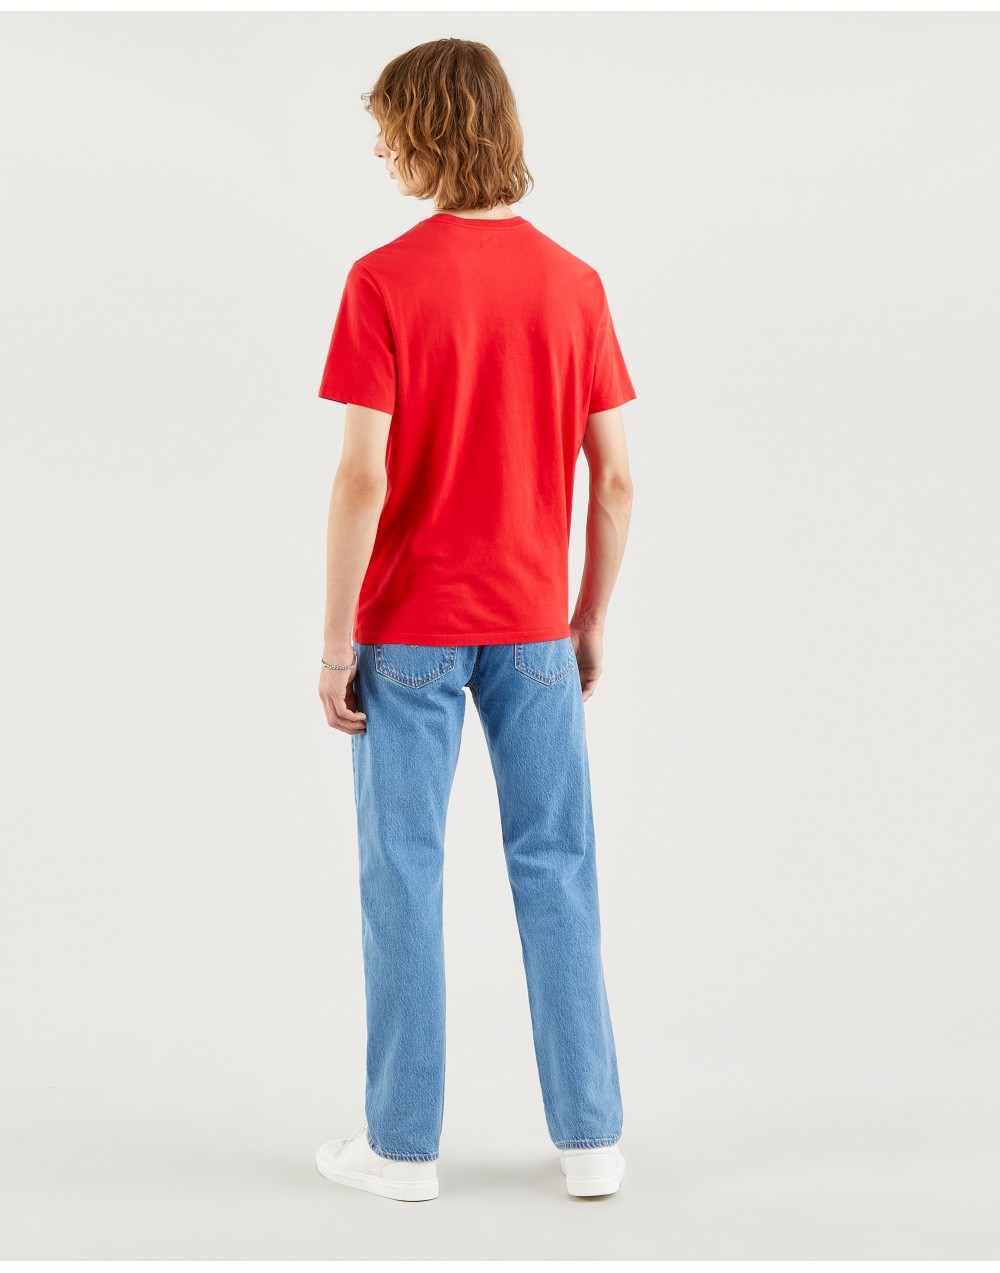 T-Shirt Levi's®  Ss Original Hm Tee - True Red  56605-0067